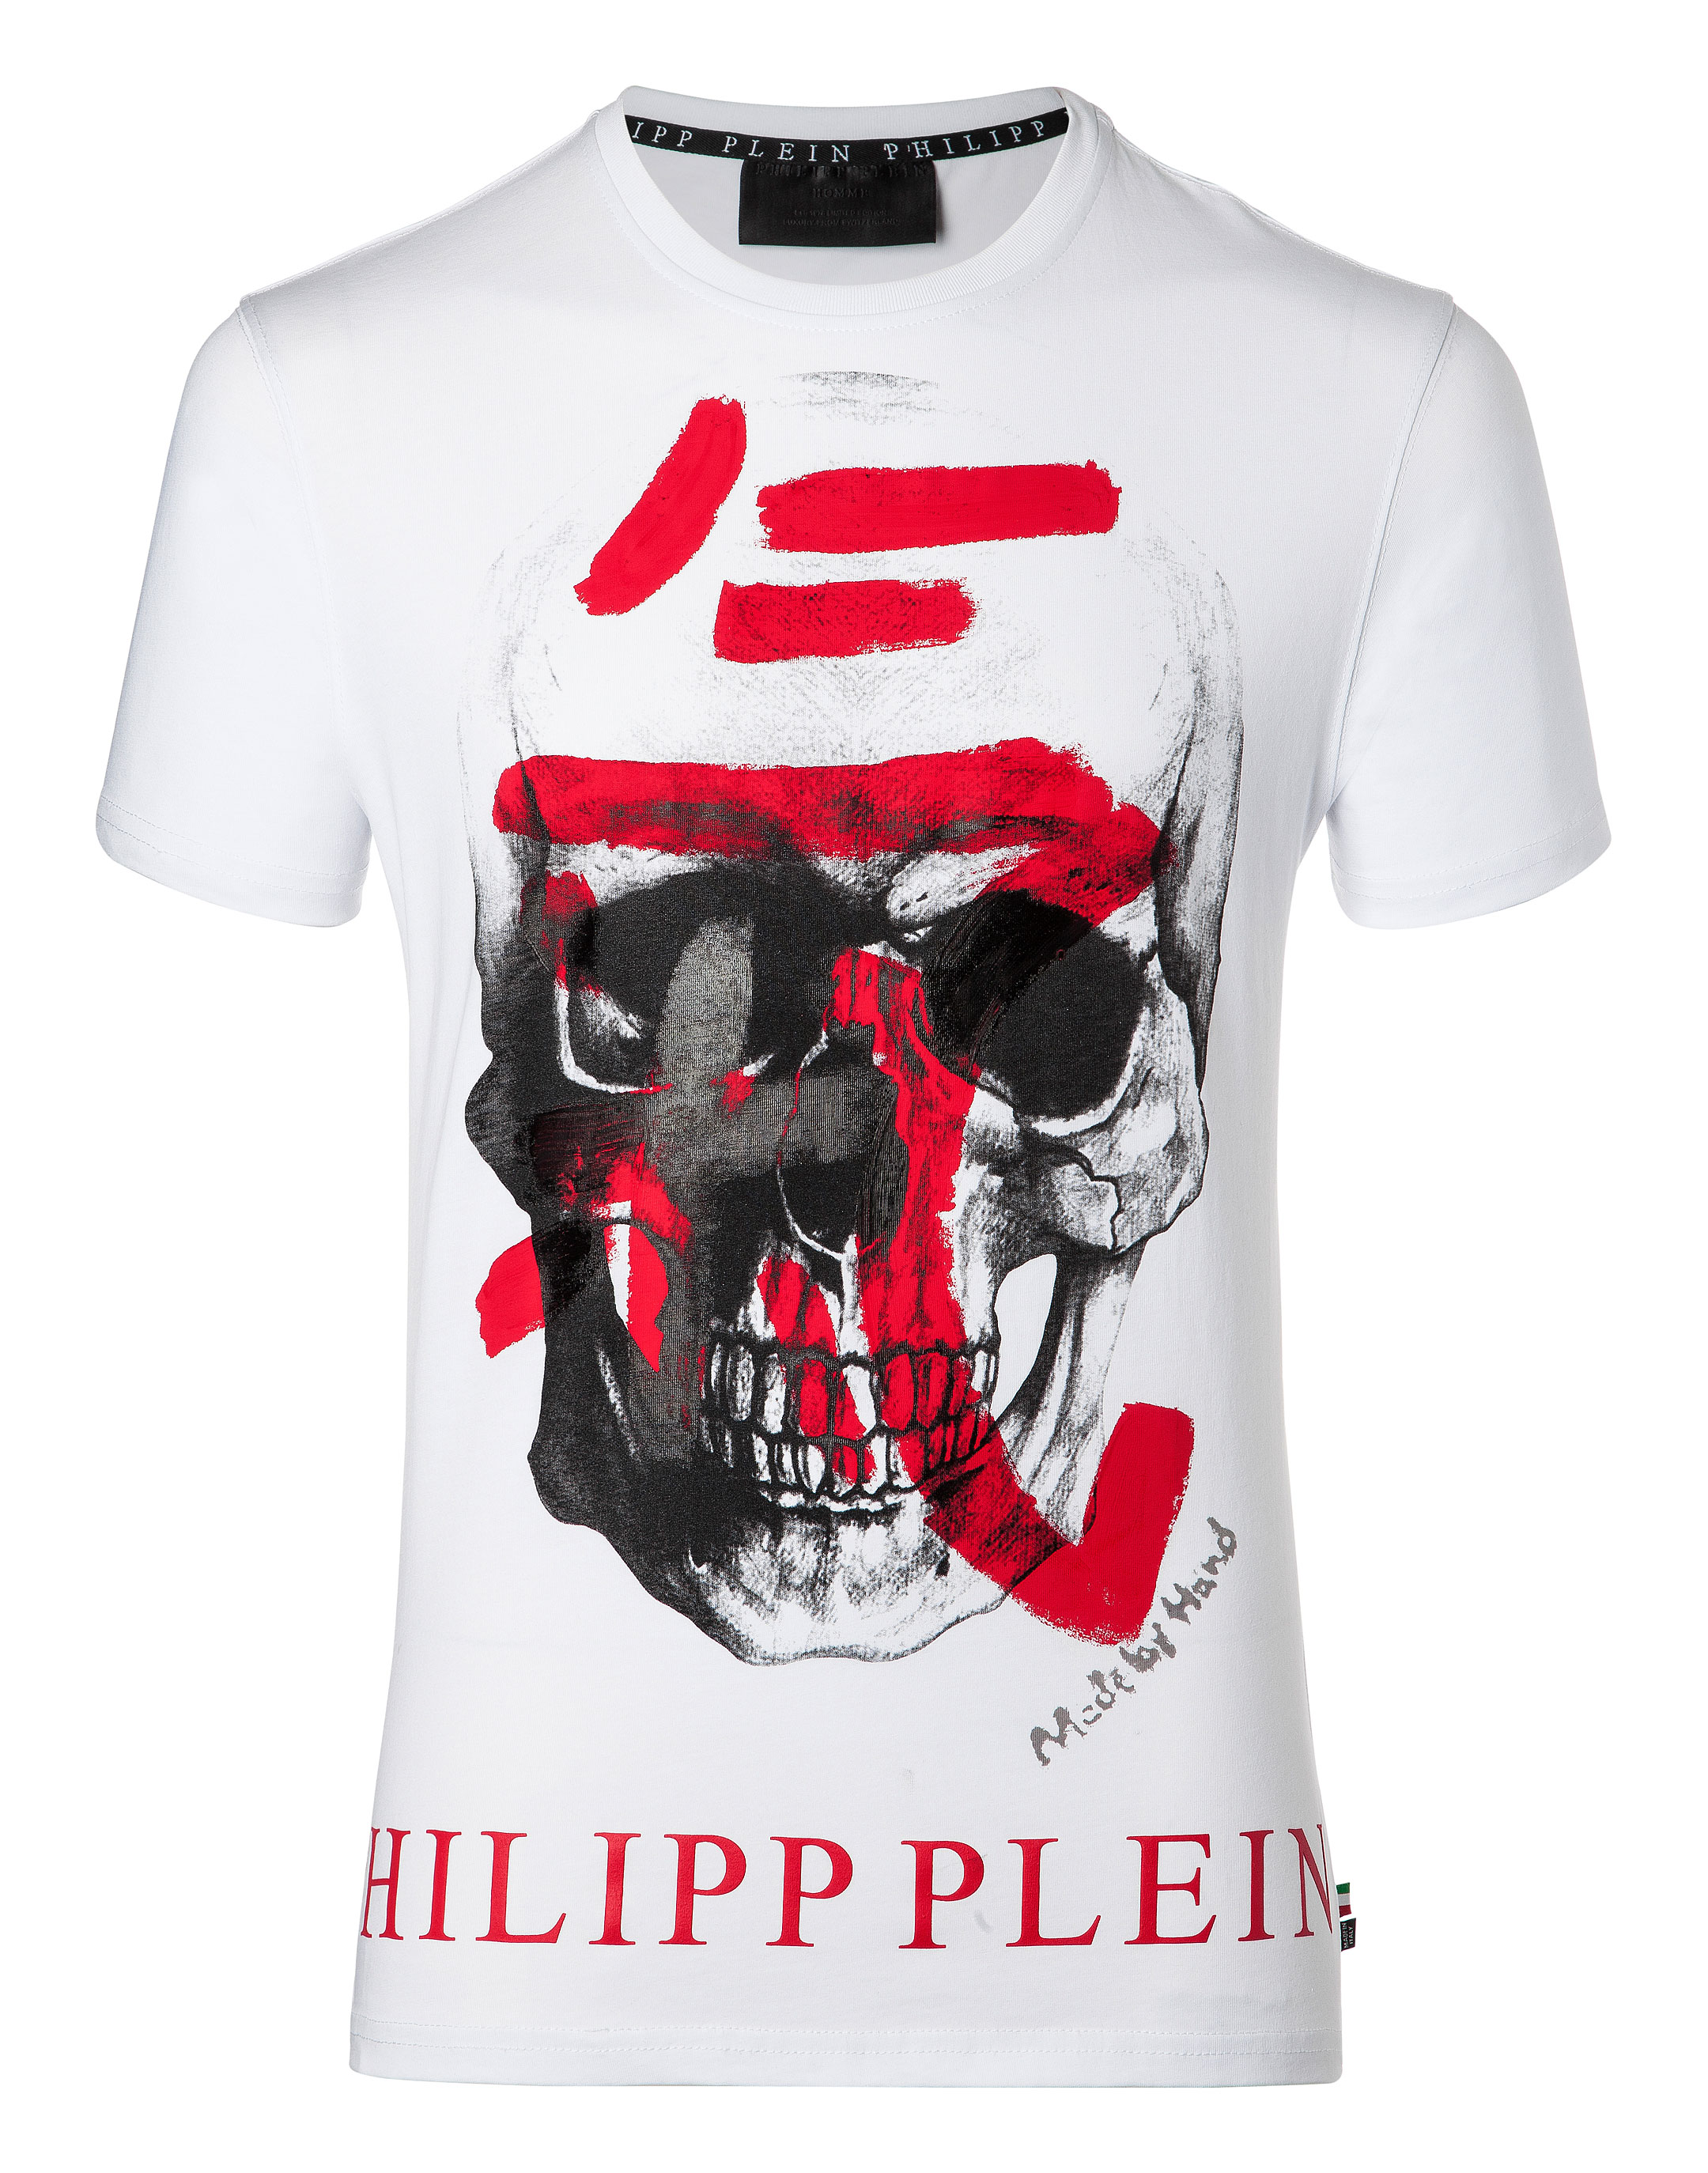 philipp plein t shirt red skull